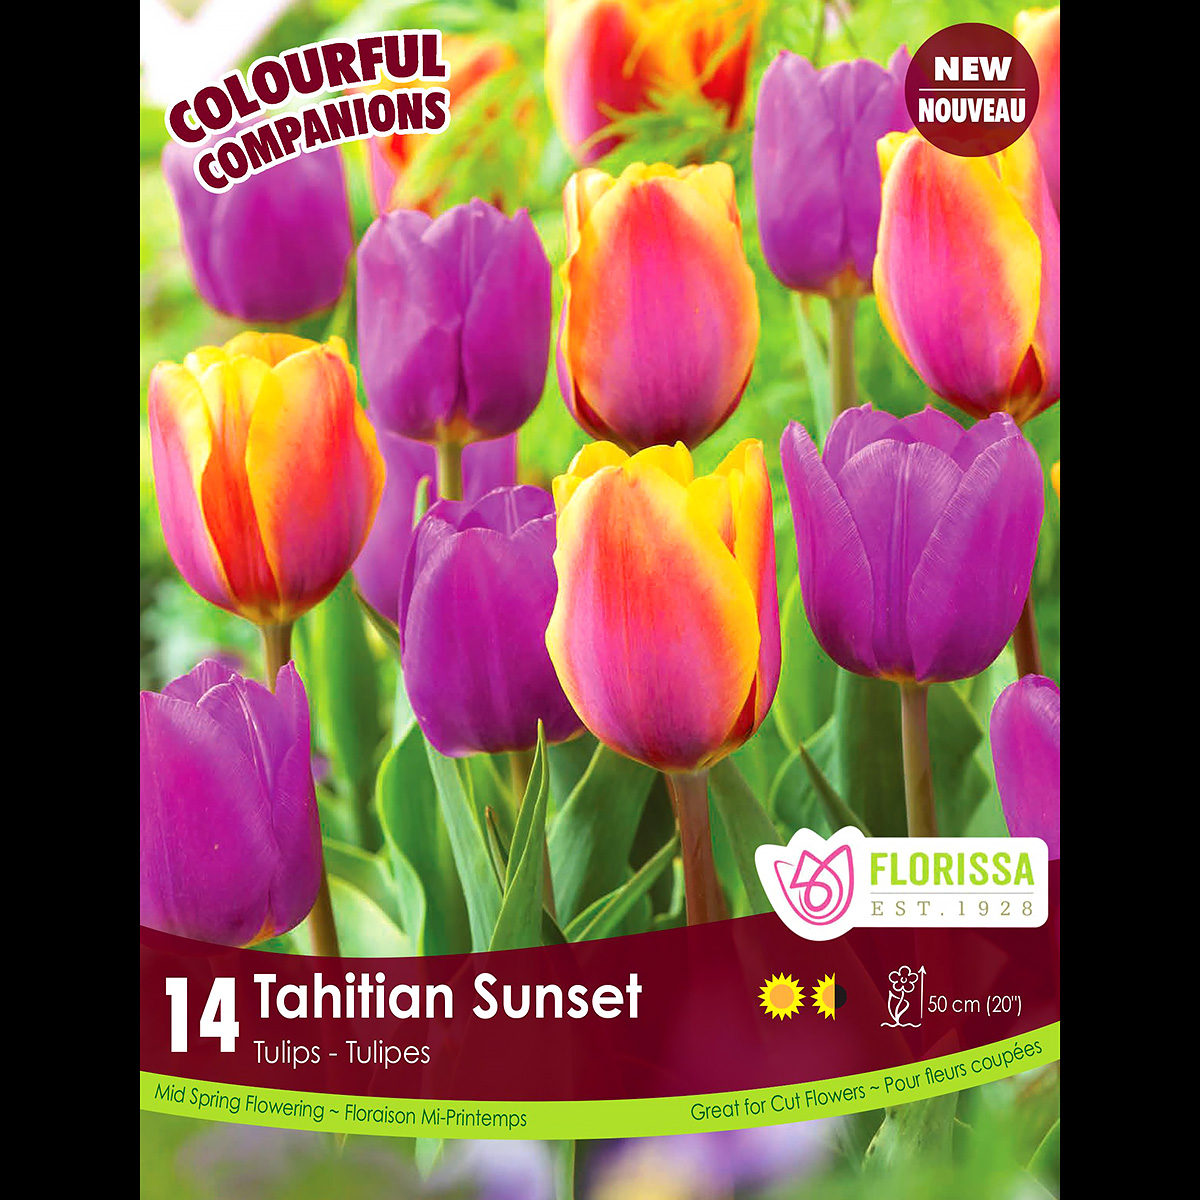 Colorful Companions Tulipa 'Tahitian Sunset' 14PK 